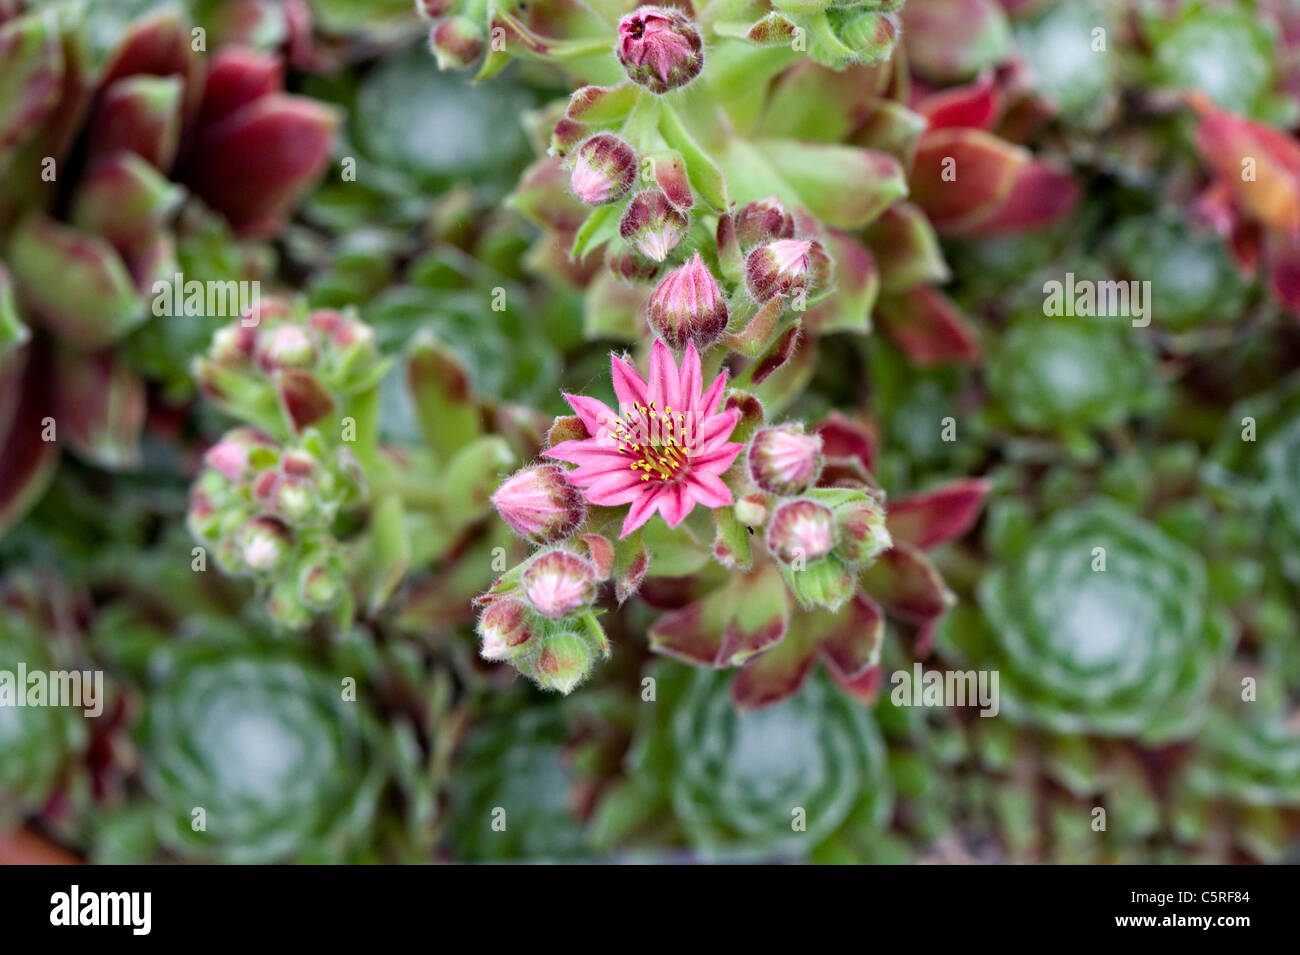 Nombres de flores rosadas fotografías e imágenes de alta resolución - Alamy